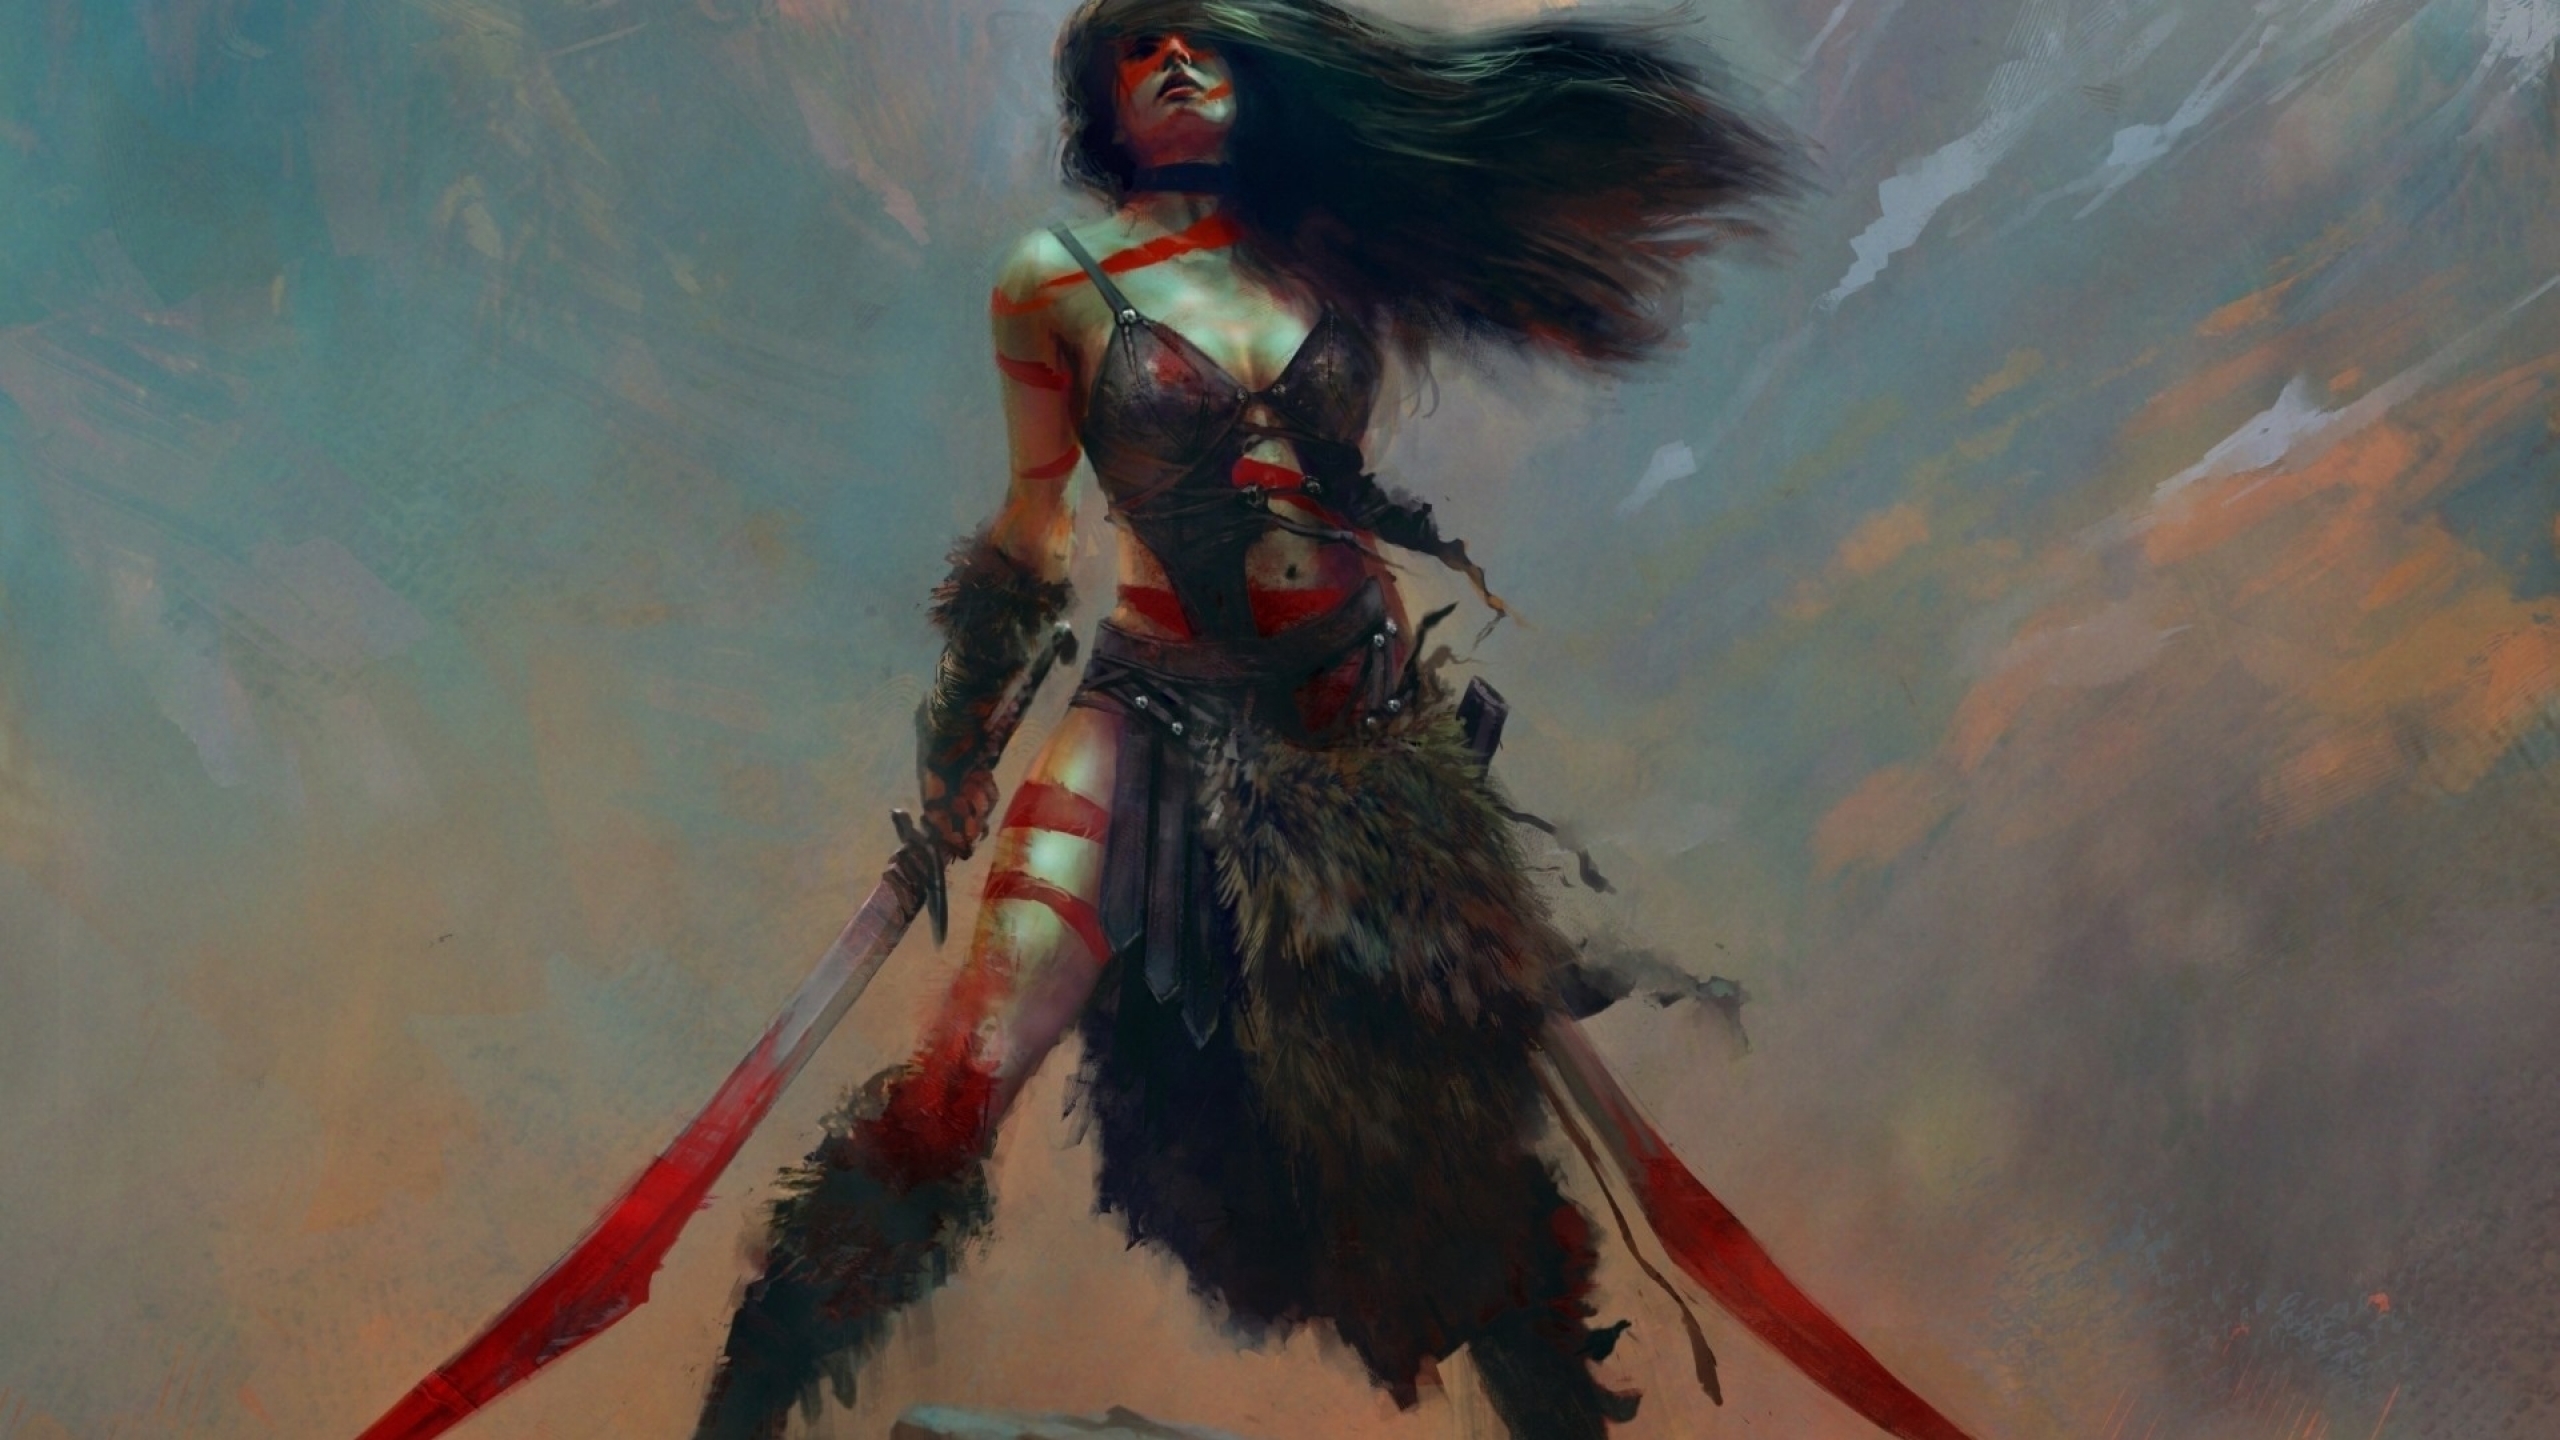 Women Sword Women With Swords Swordswoman Digital Art Warrior Maciej Kuciara Fantasy Girl Artwork Gi 2560x1440